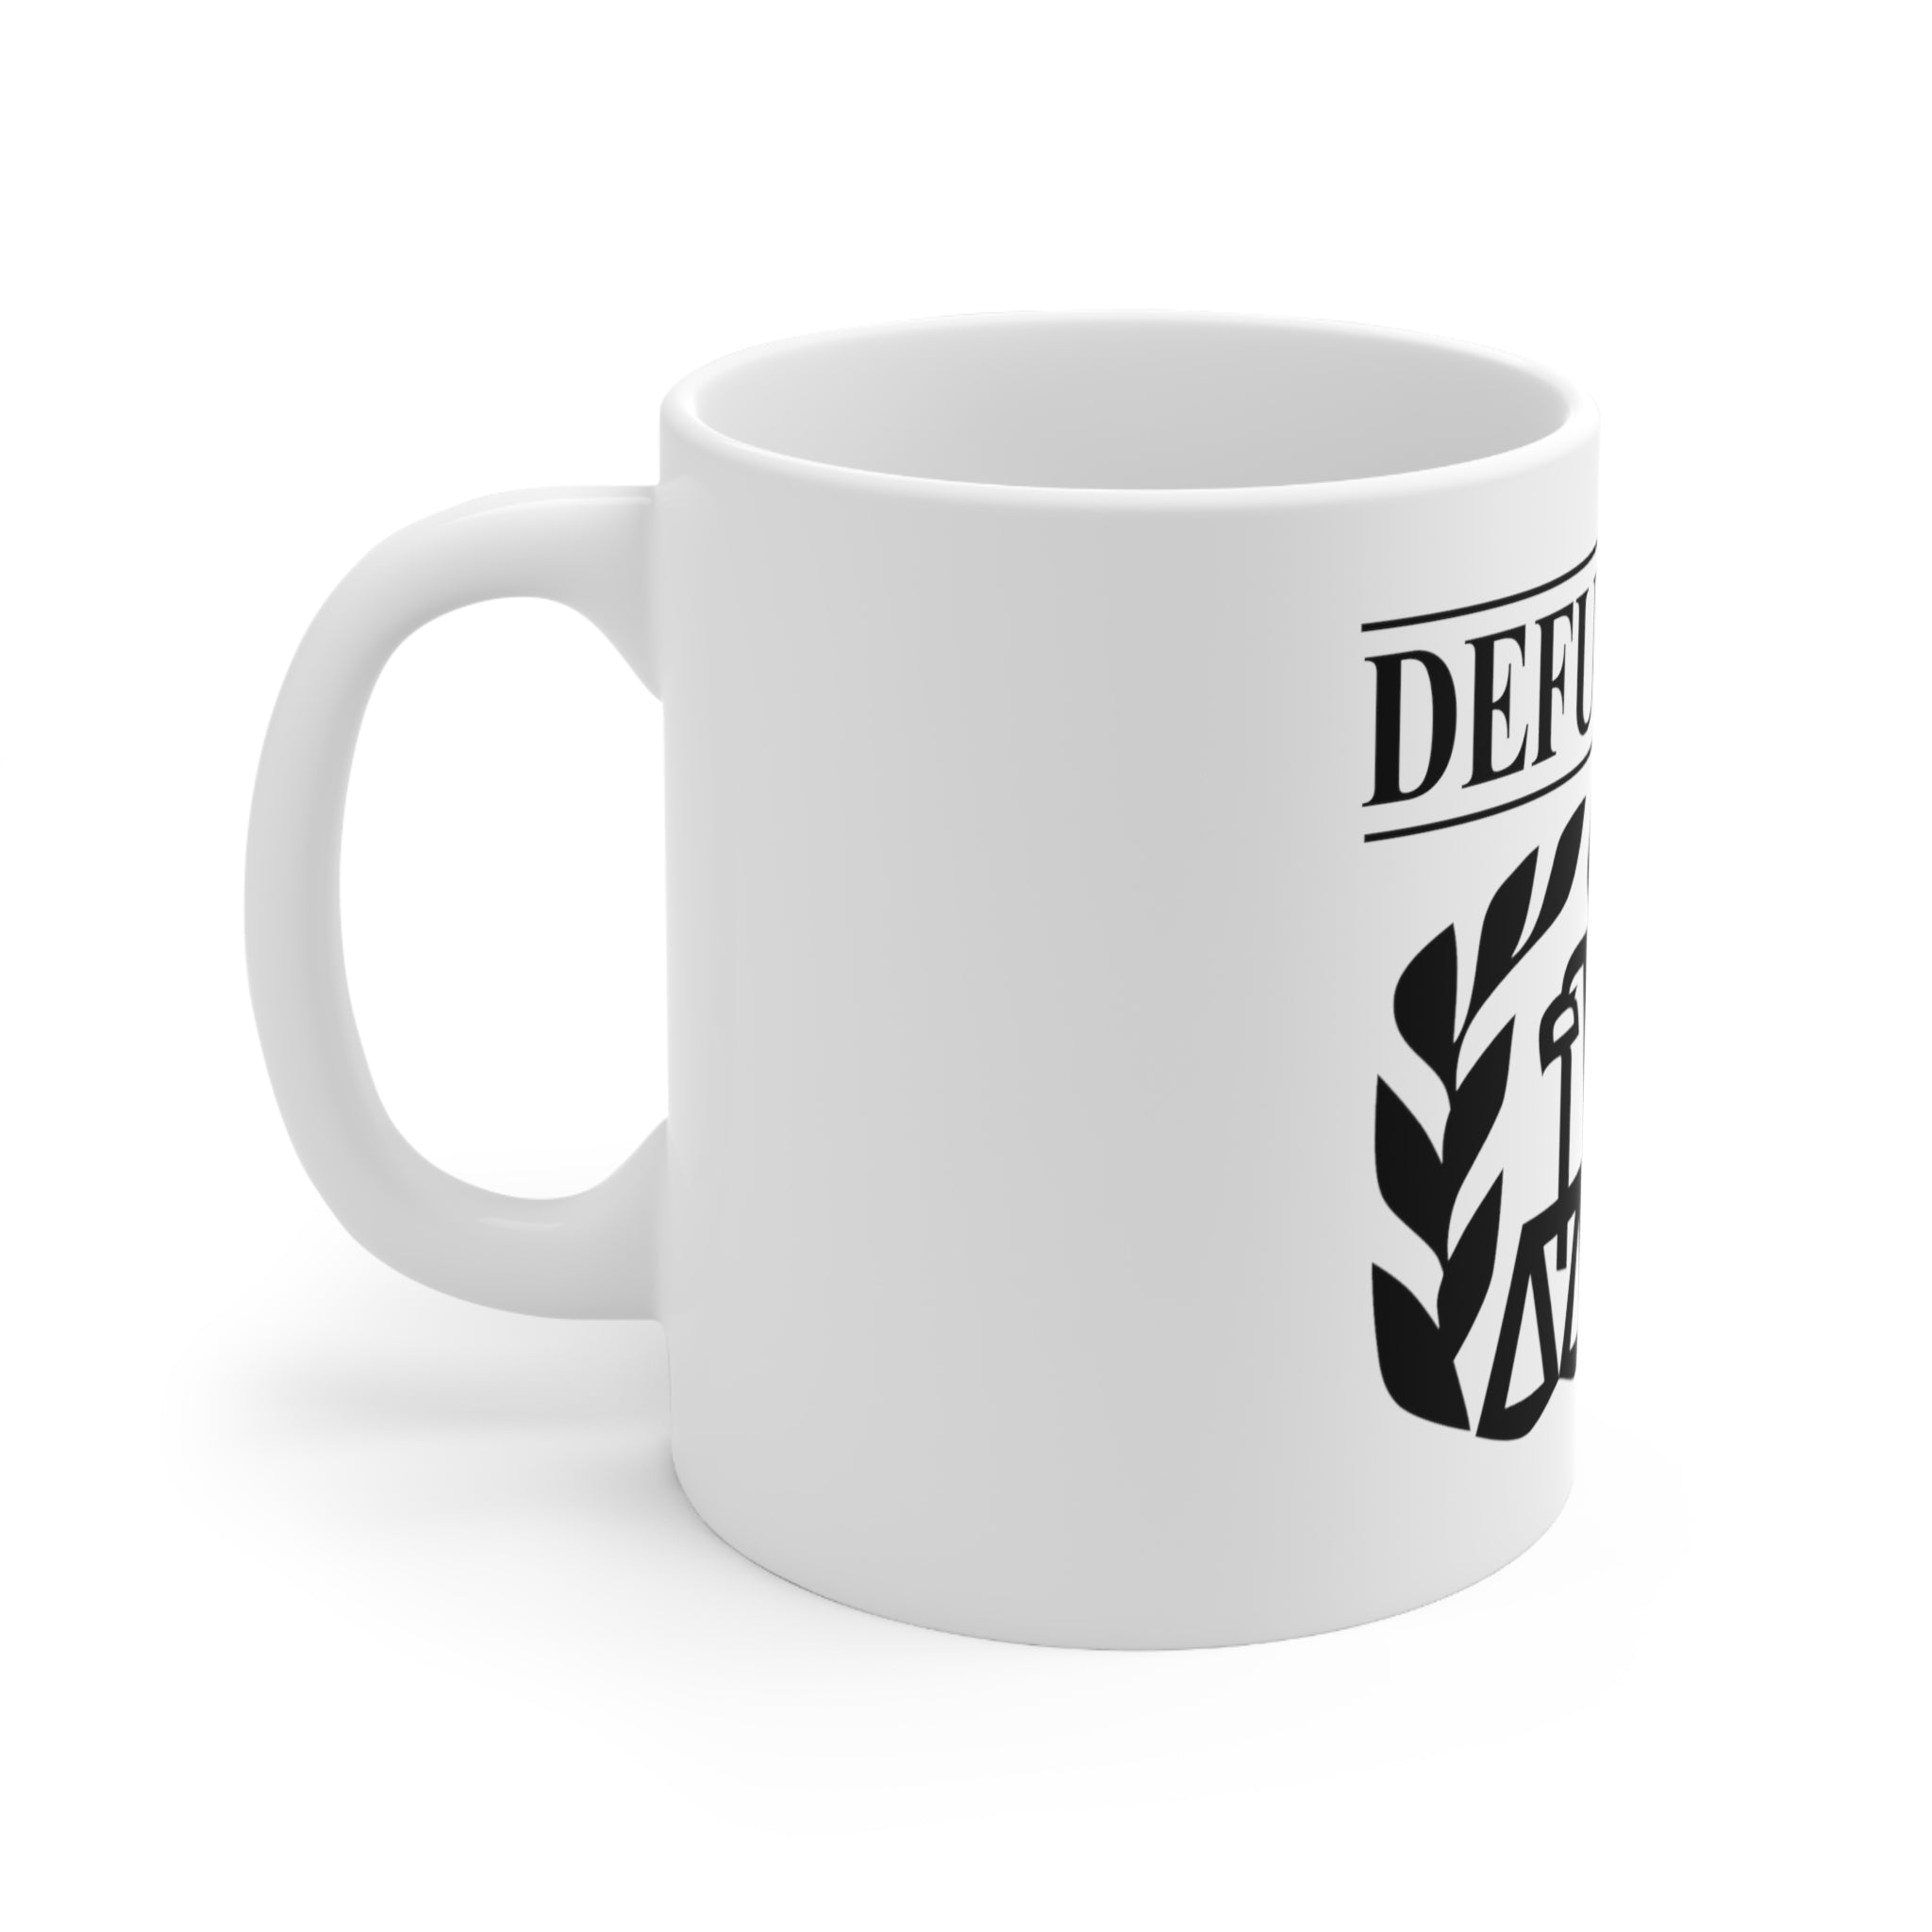 Defund the IRS - Ceramic Mug 11oz